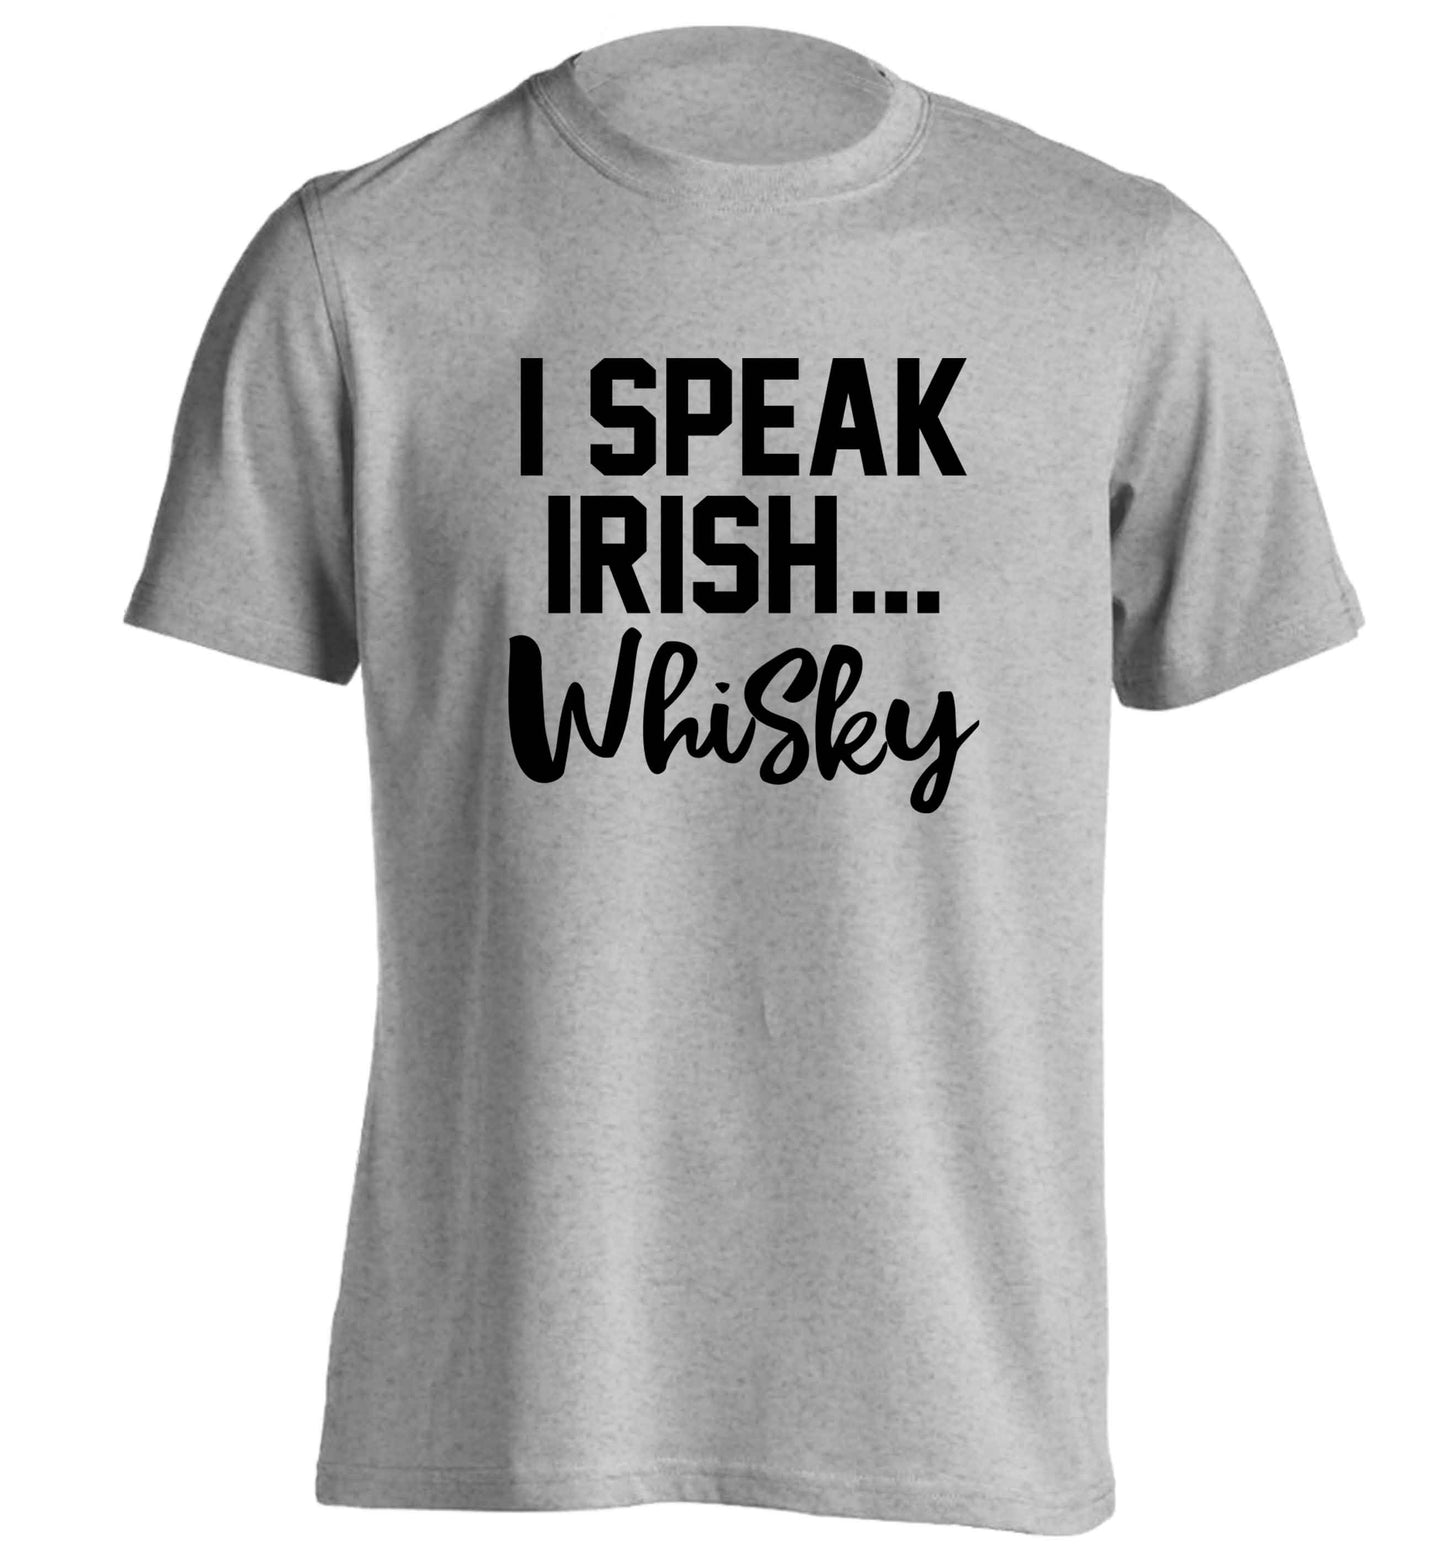 I speak Irish whisky adults unisex grey Tshirt 2XL